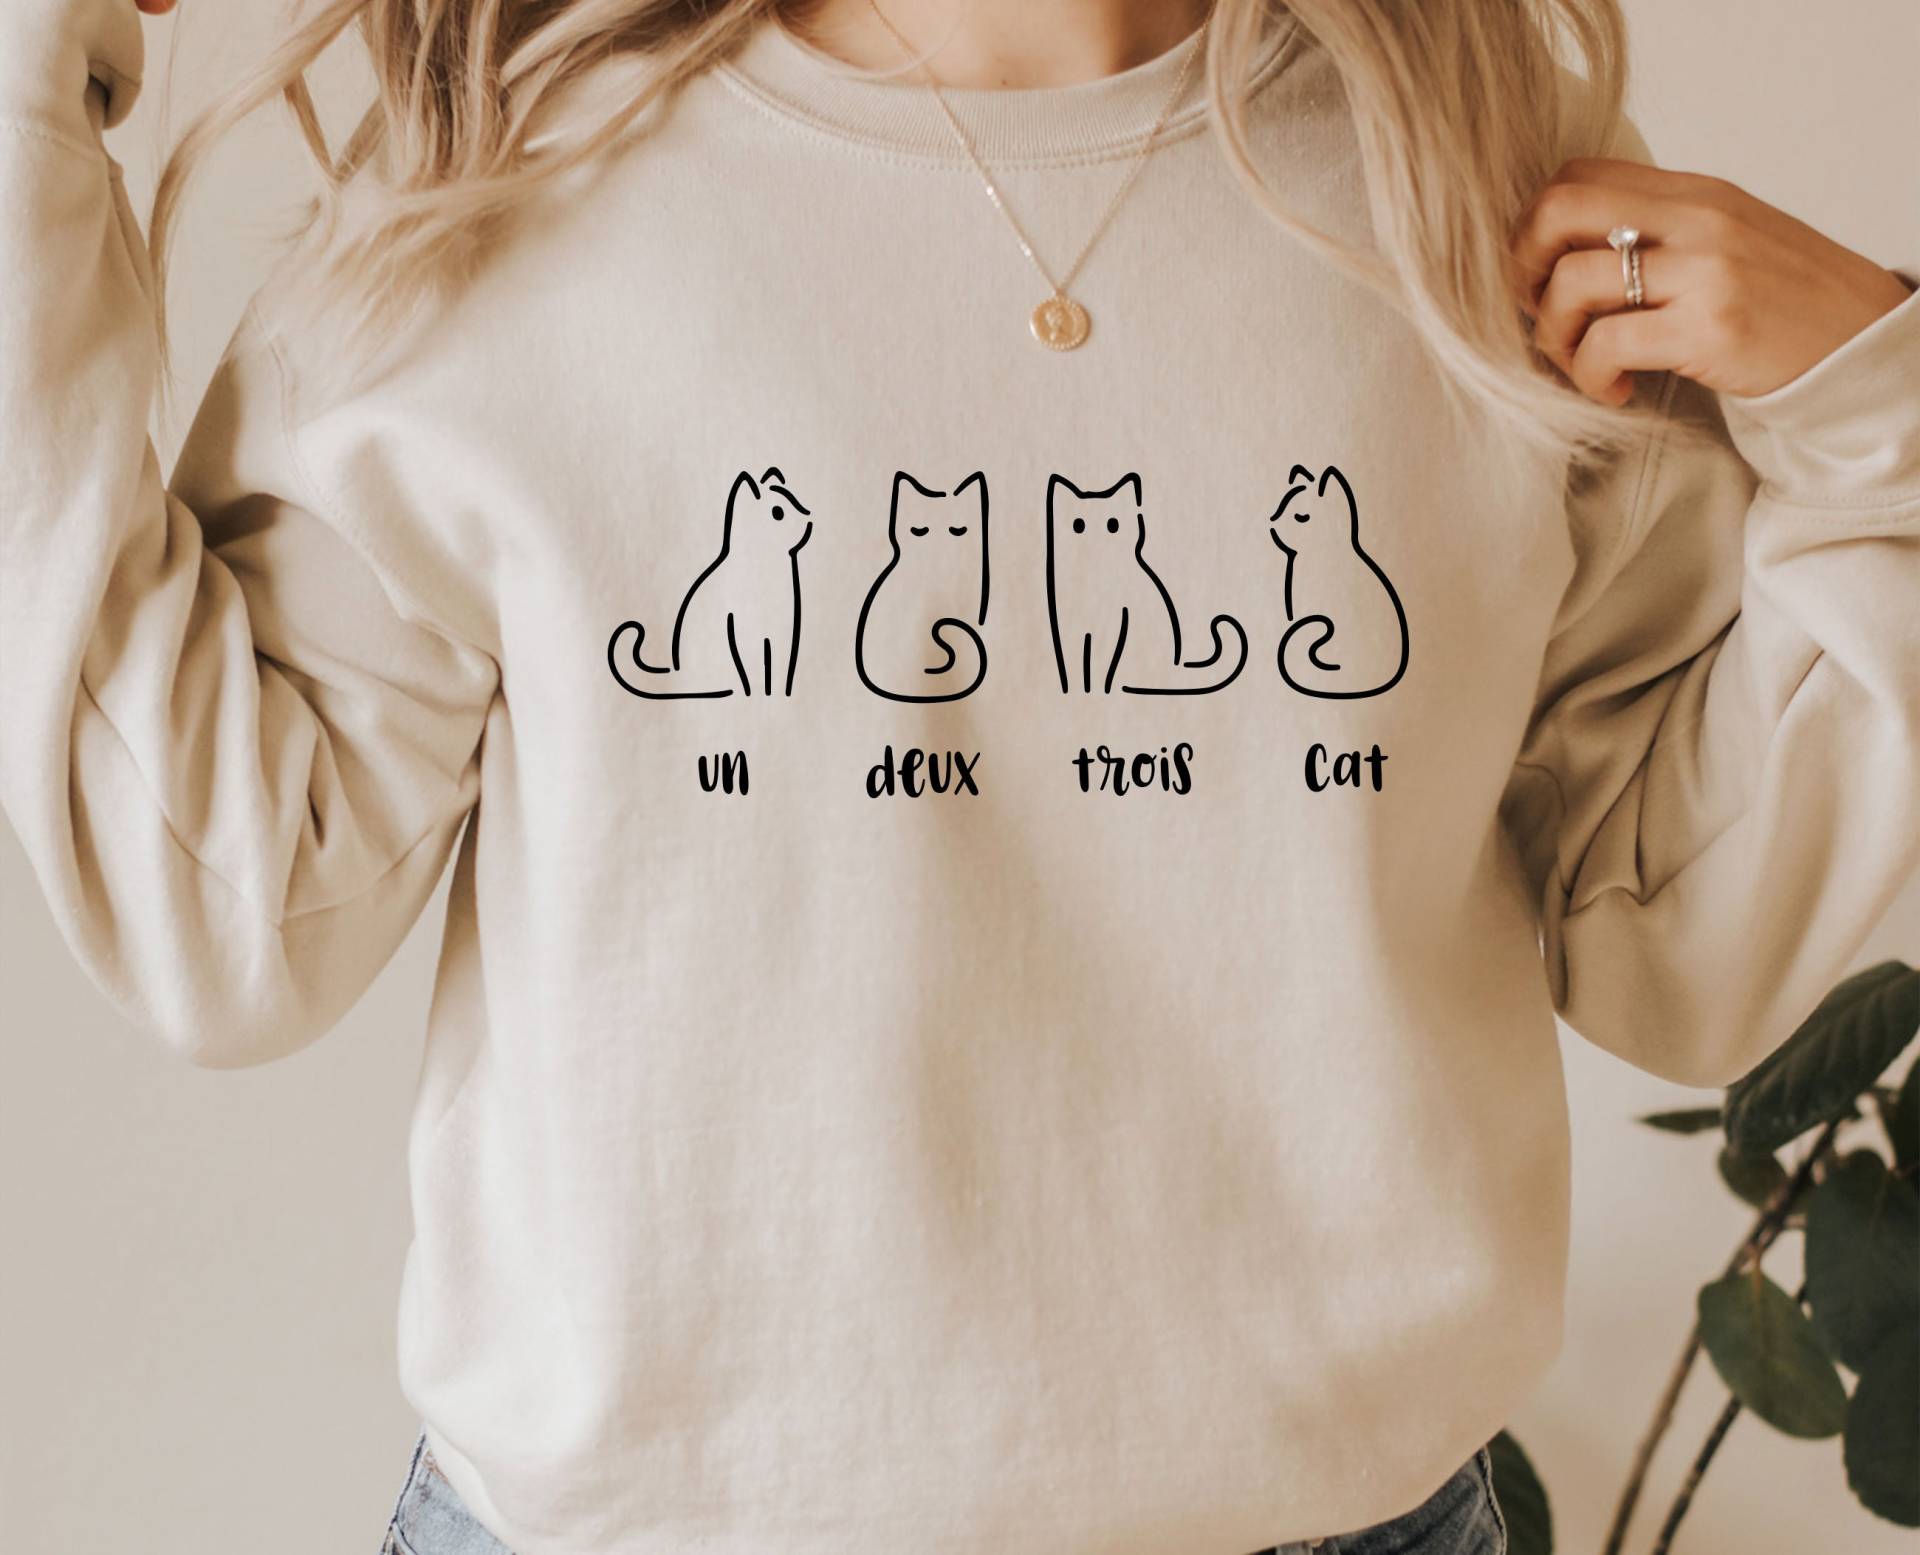 Katzen Sweatshirt, Katzenmama Pullover, Lustiges Katzengeschenk, Katzenliebhaber Geschenk, Katzenpullover, Geschenke Für Katzenliebhaber von LismoreBoutique